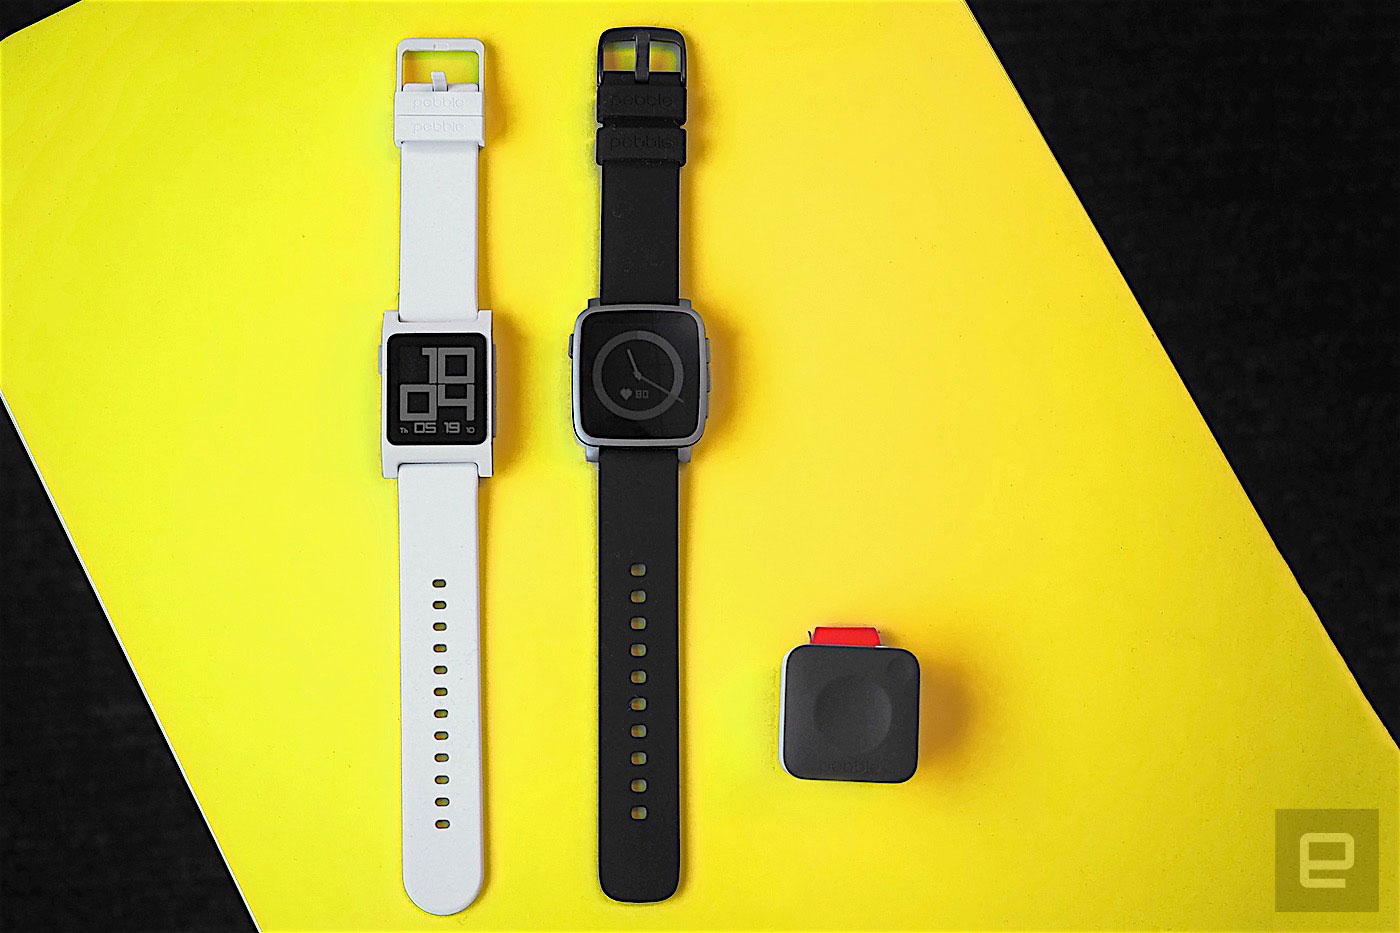 Pebble's new smartwatches focus on fitness